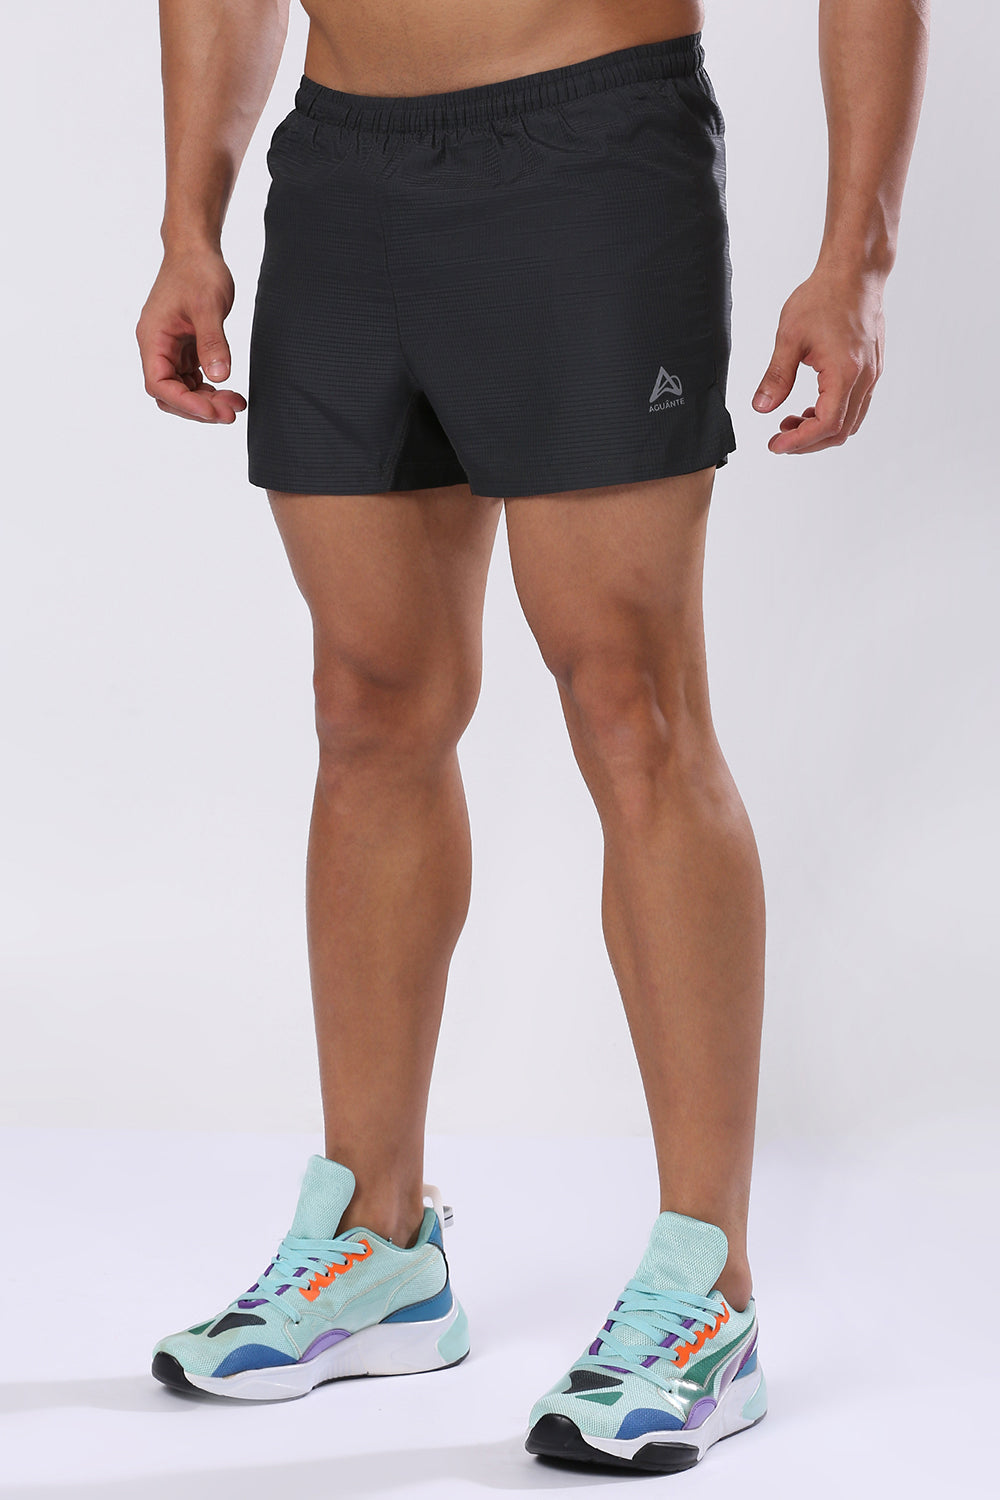 Buy Shorts For Men, Sports Shorts For Men Online, Shorts For Men